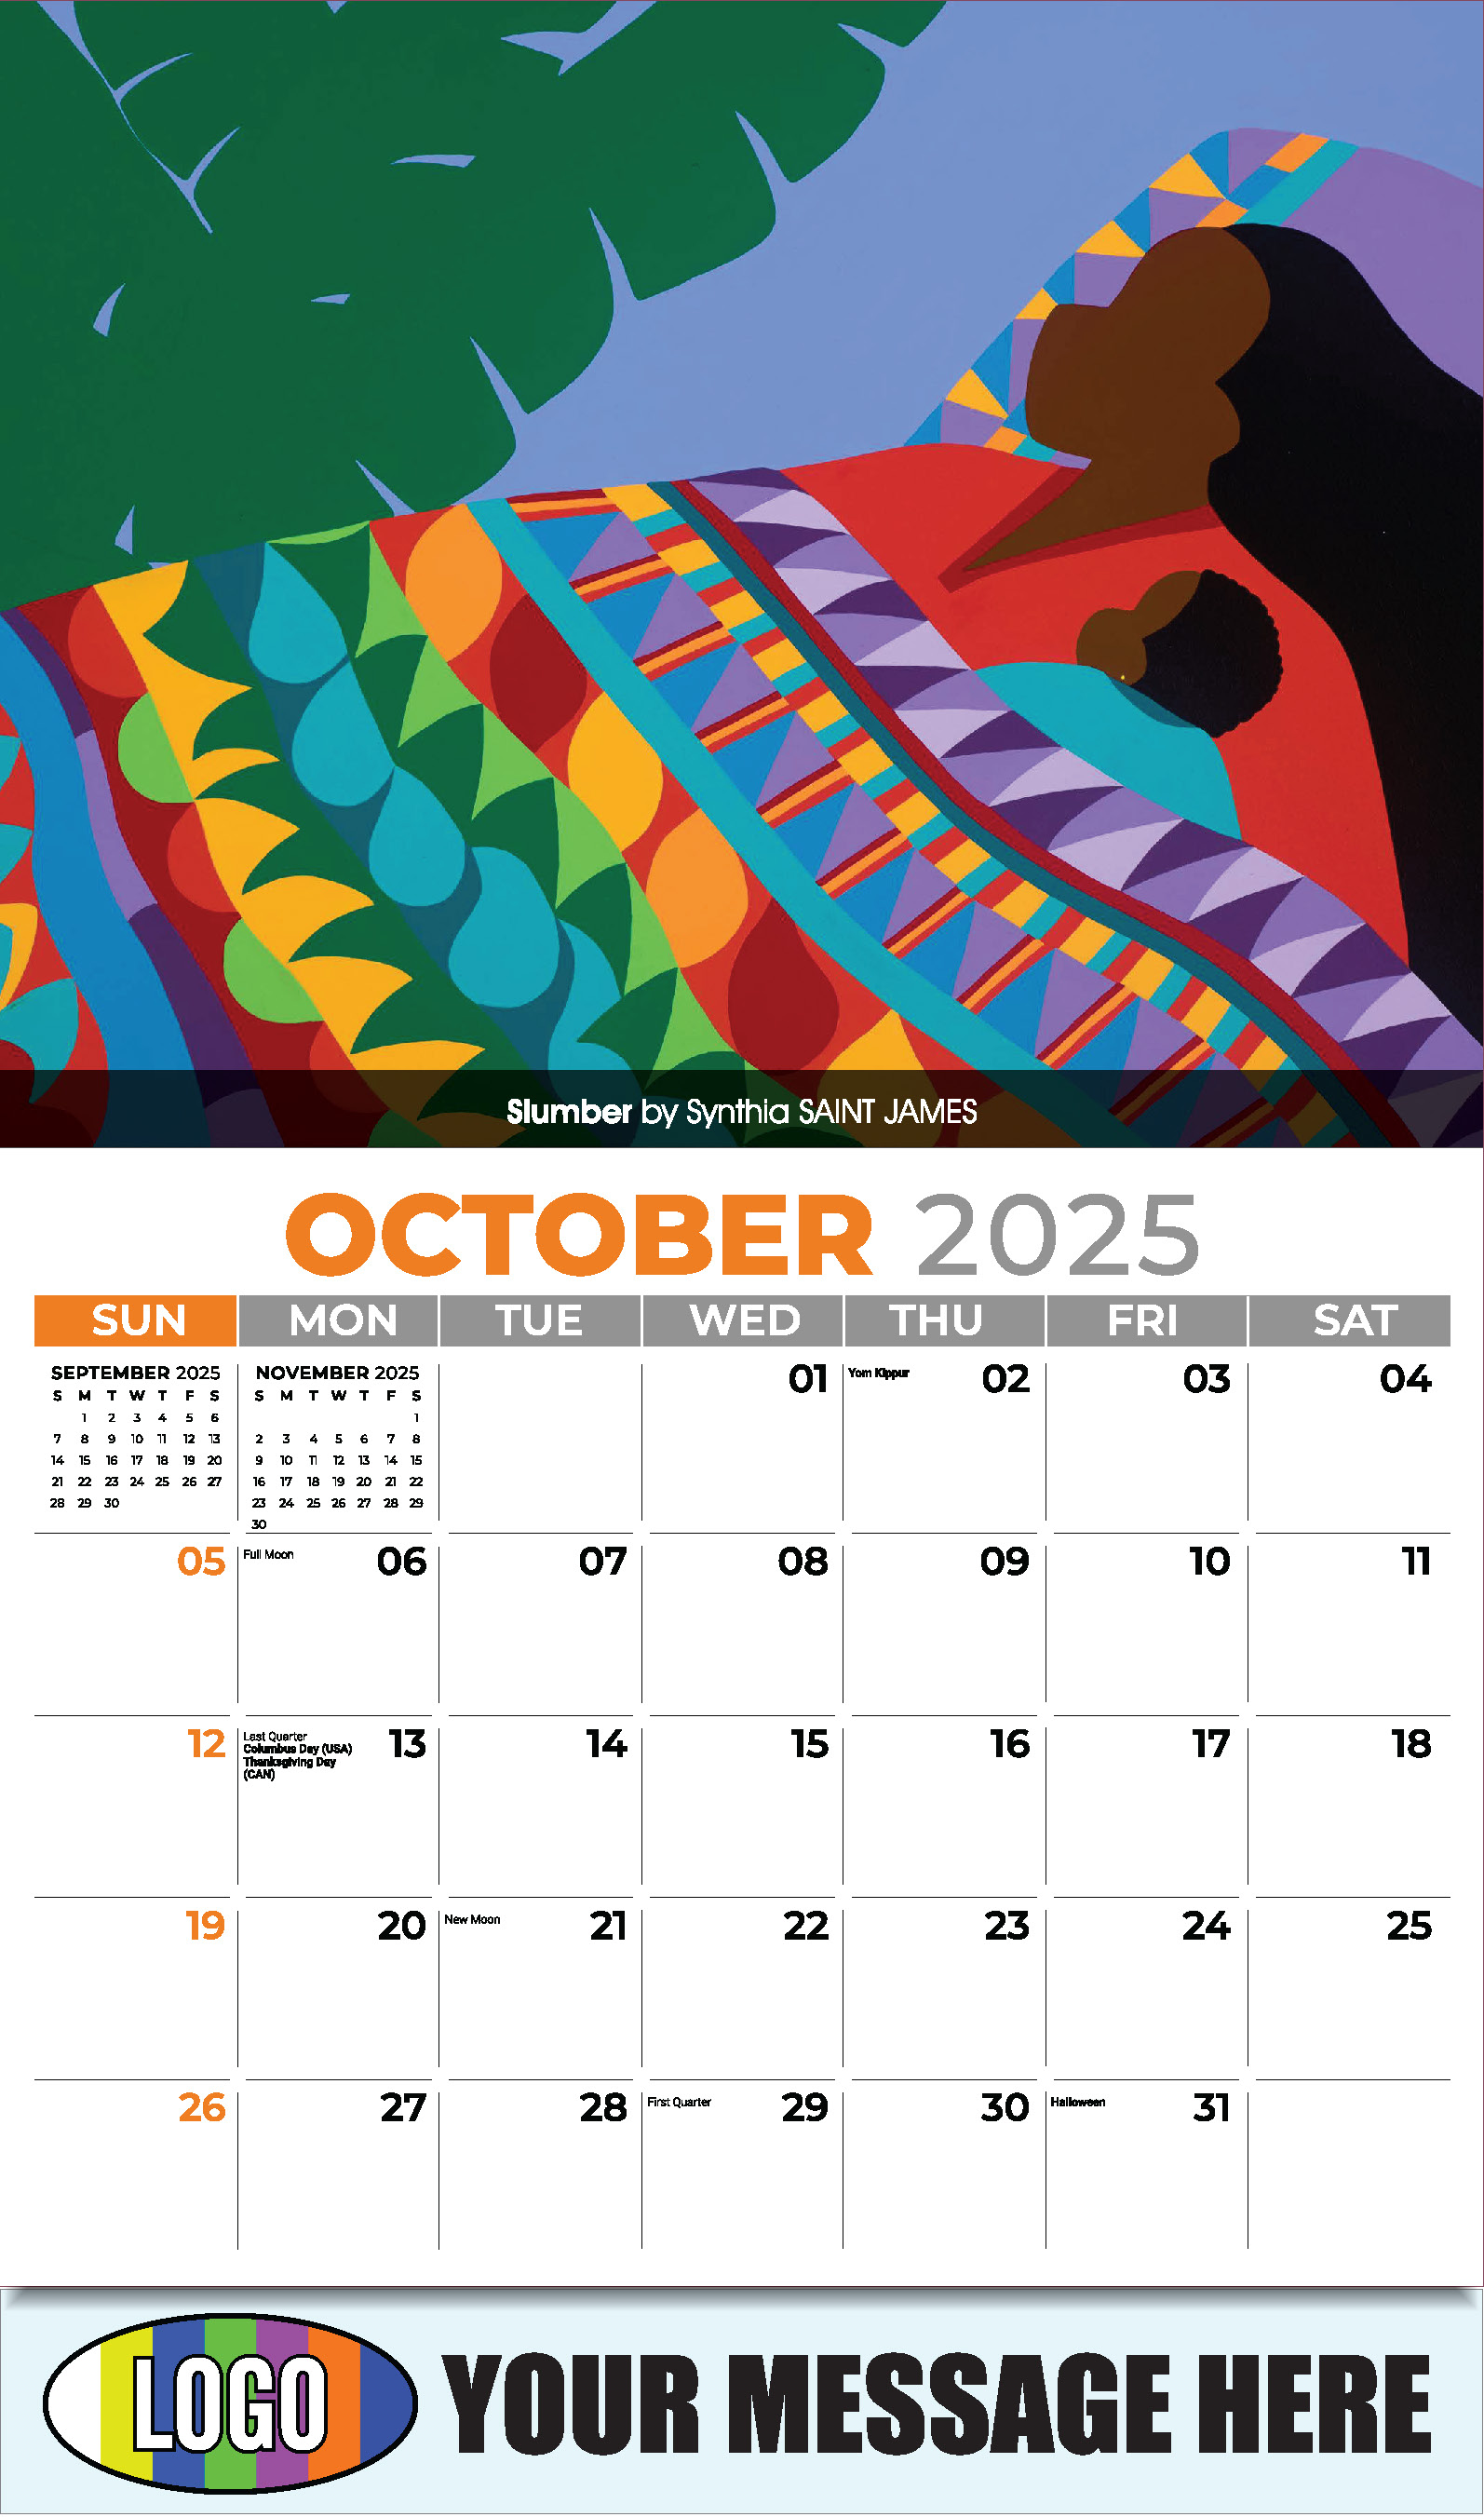 Celebration of African American Art 2025 Business Promotional Calendar - October